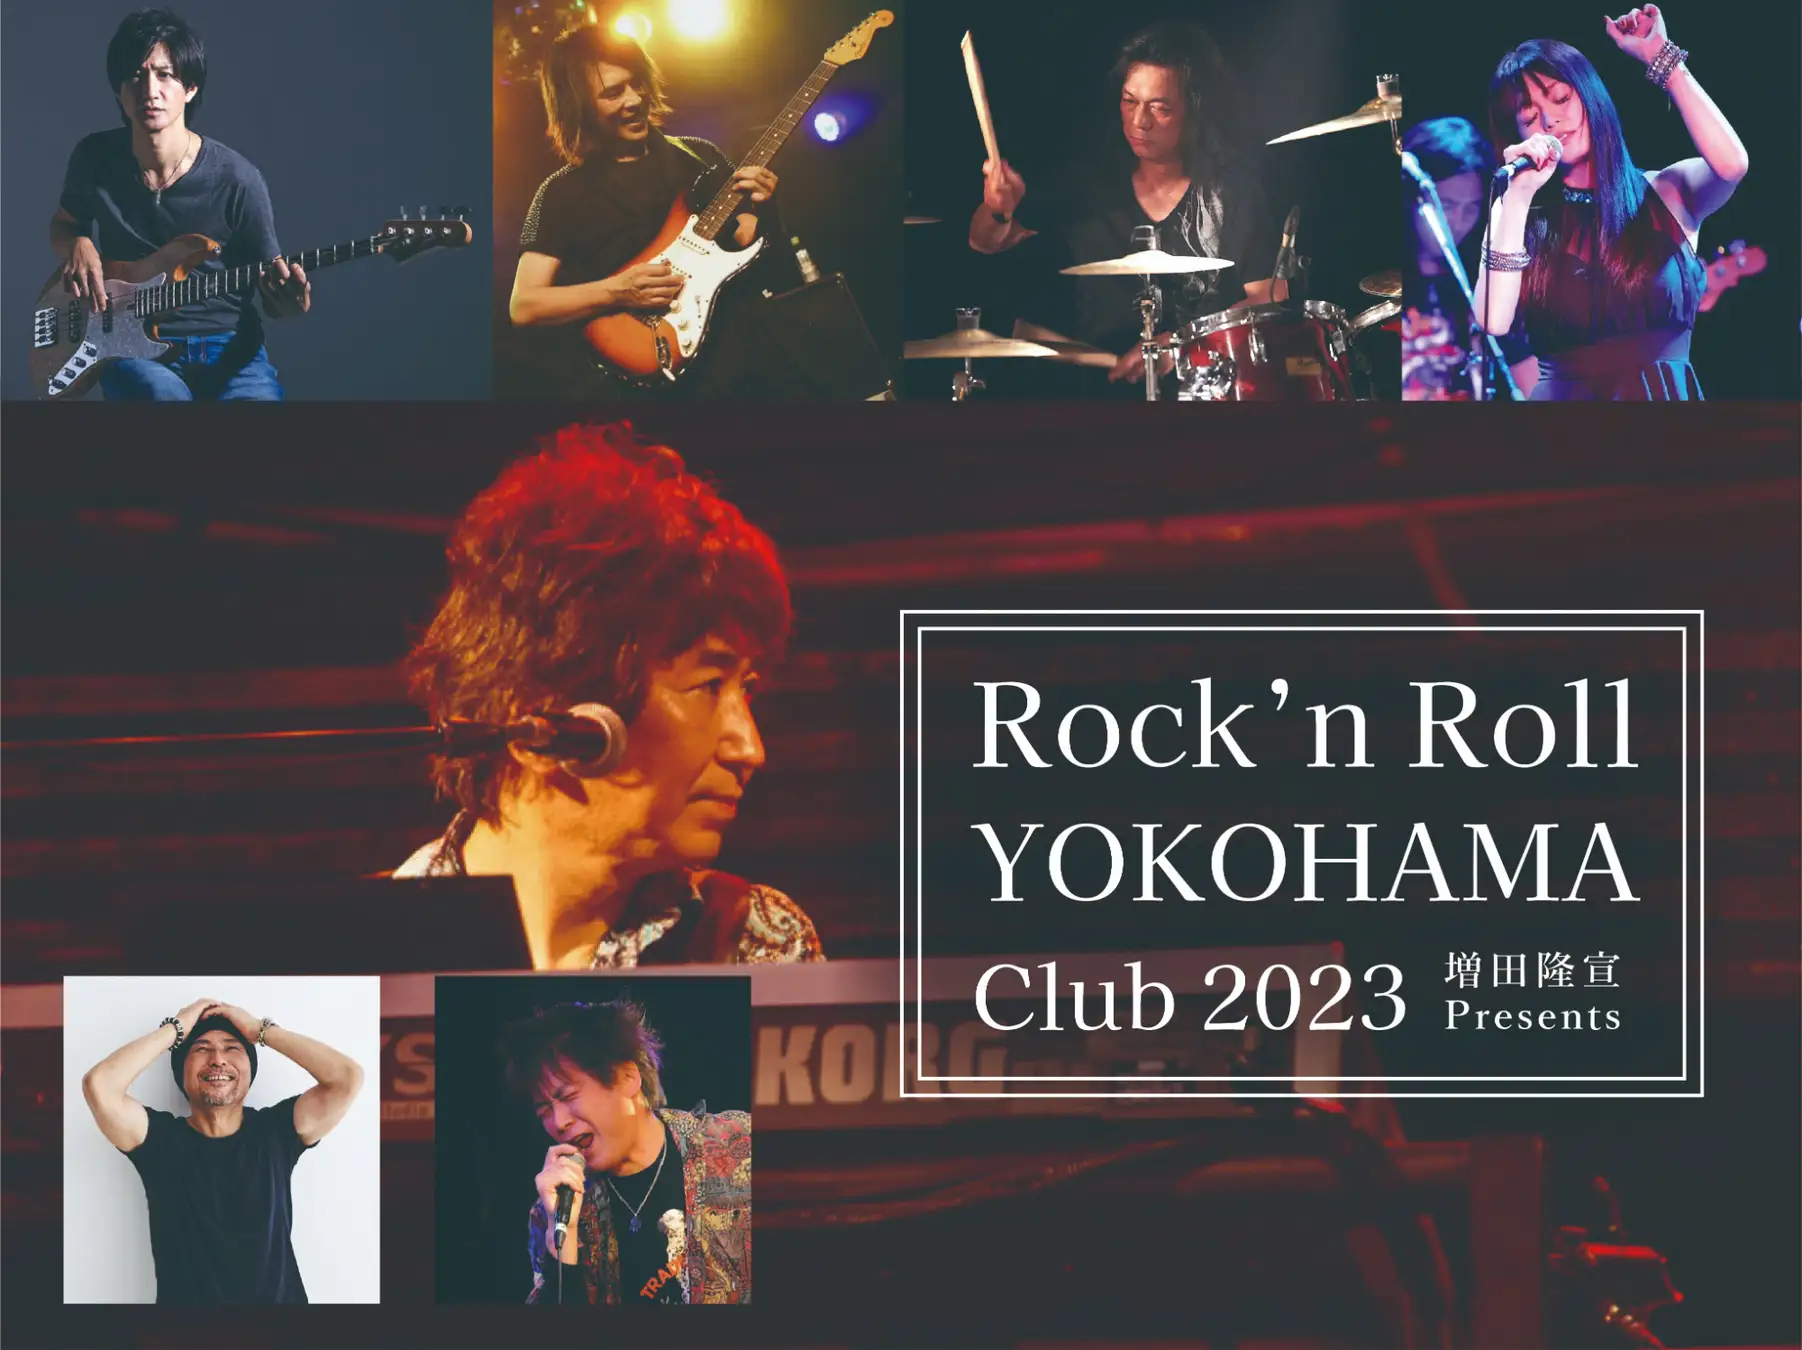 『増田隆宣 Presents Rock’n Roll YOKOHAMA Club 2023』の告知画像